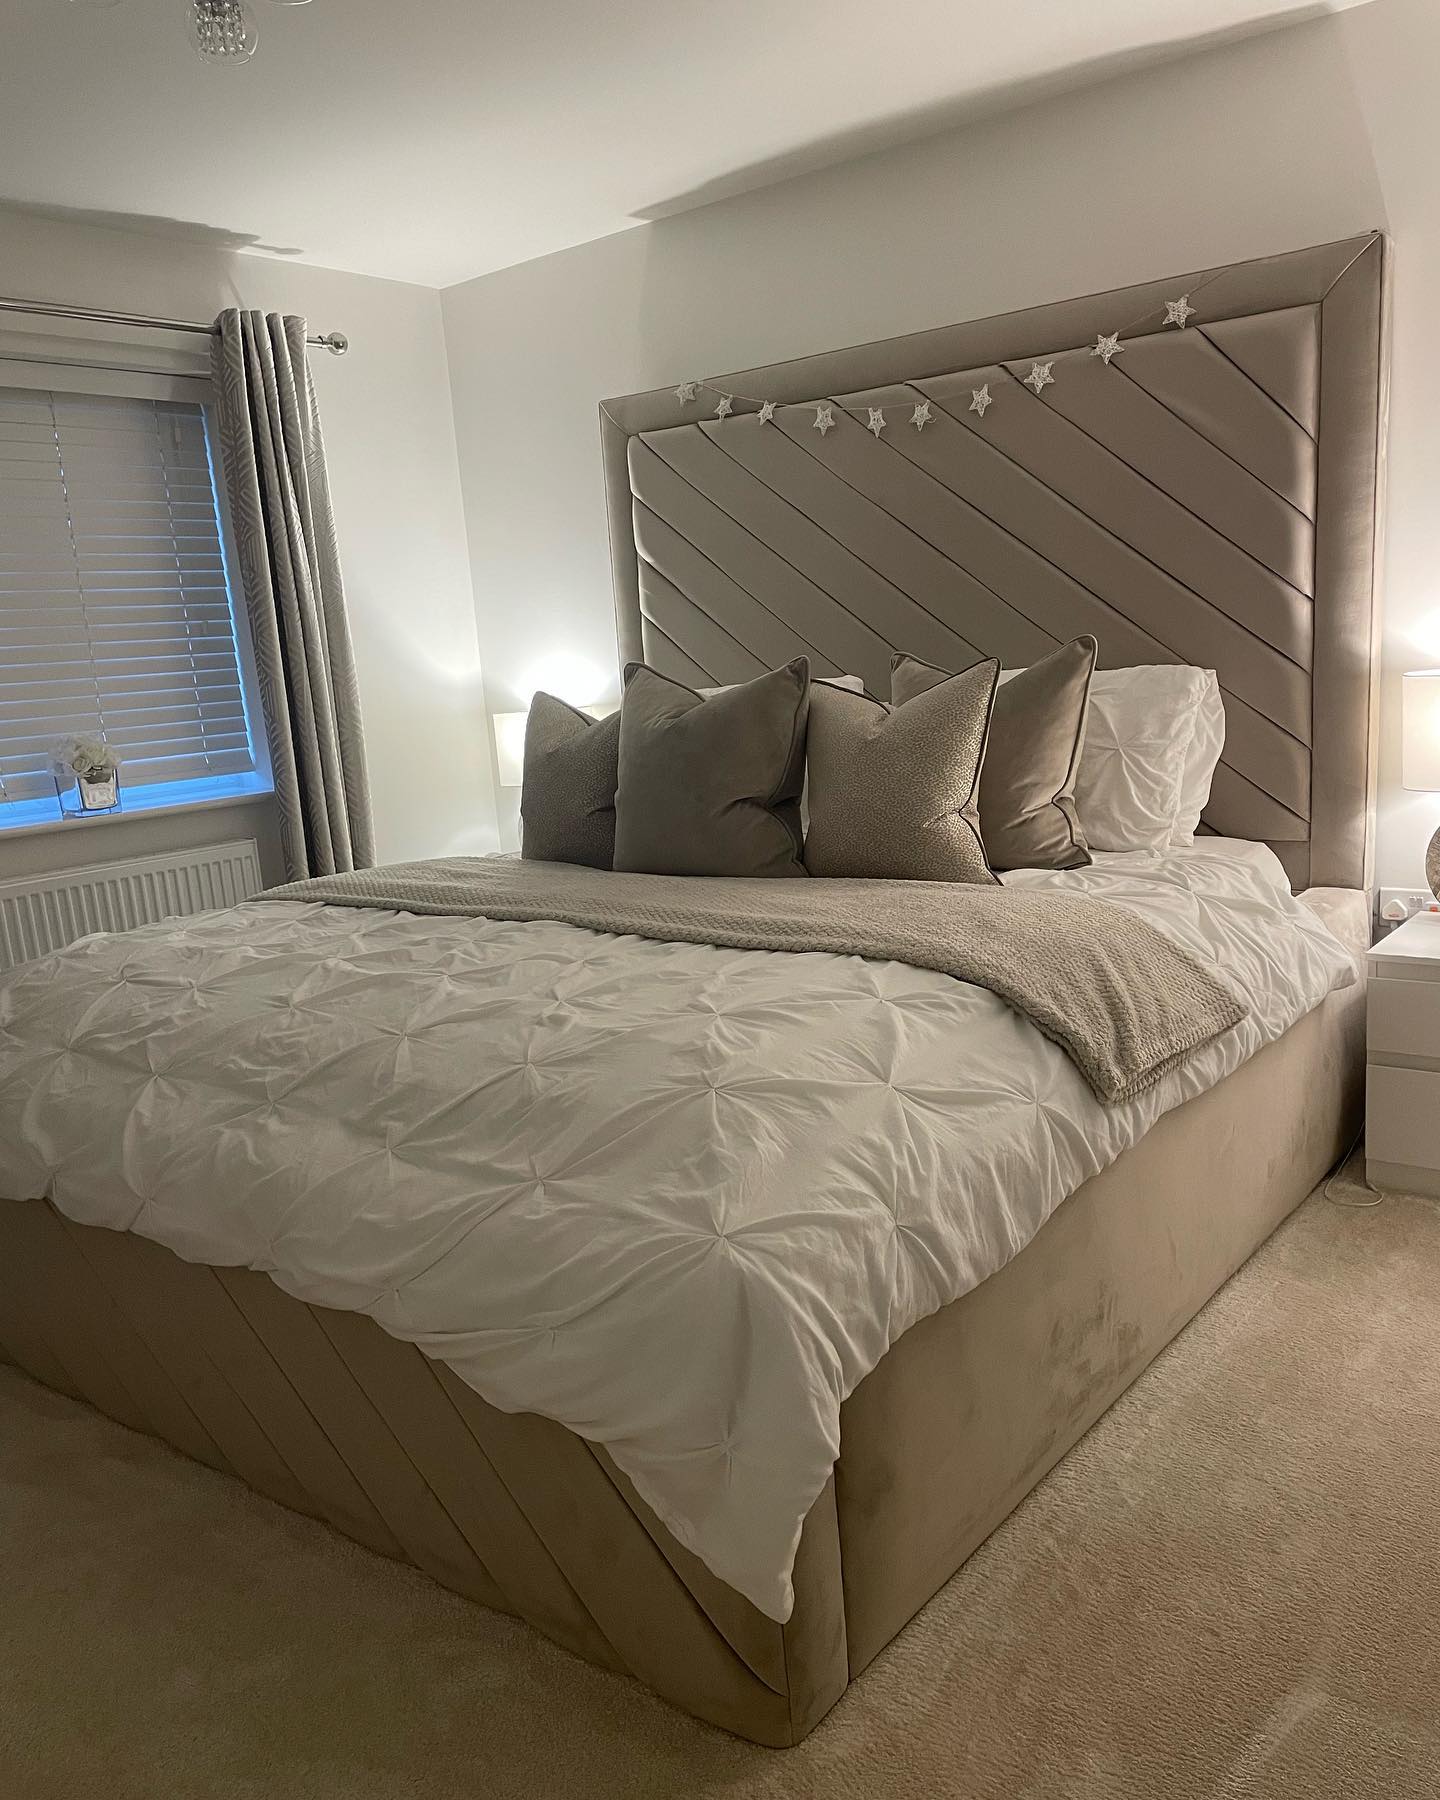 18'' Sides Sunshine Studded Upholstered Bed/Ottoman/Storage/Luxury Bed Britainsleep